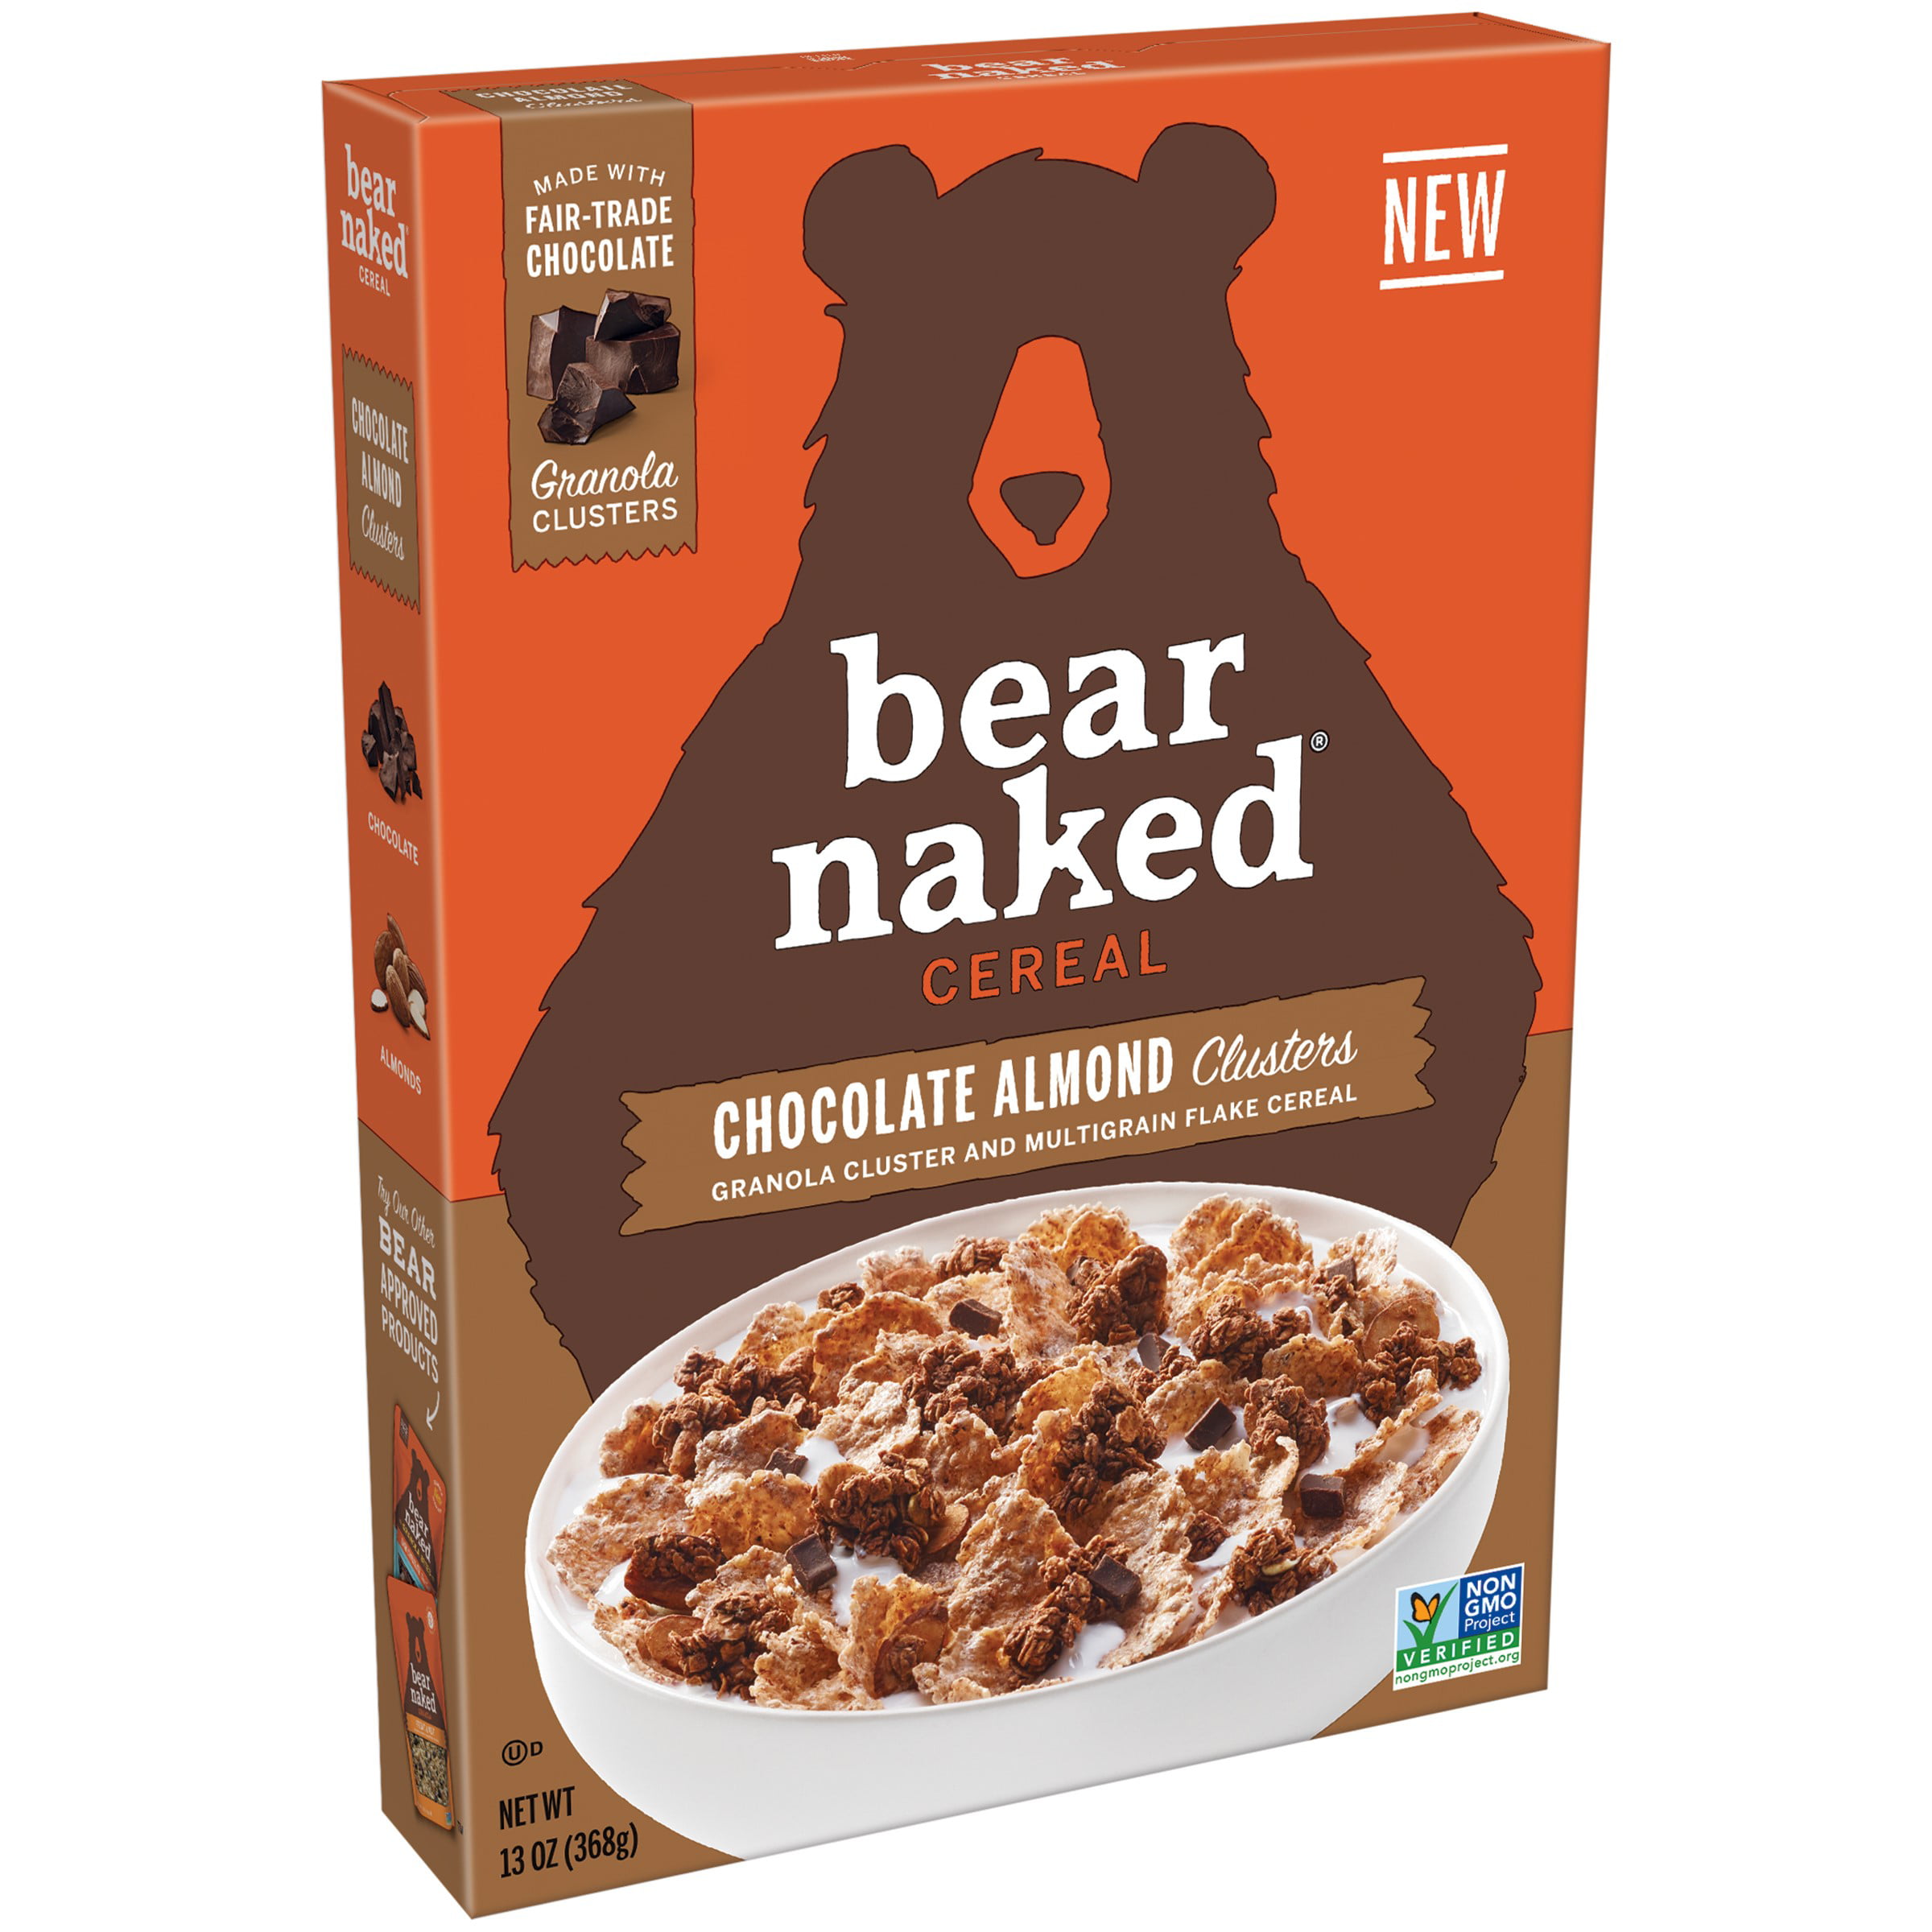 Bear Naked, Grain Free Granola, Gluten Free, Cinnamon Roll 